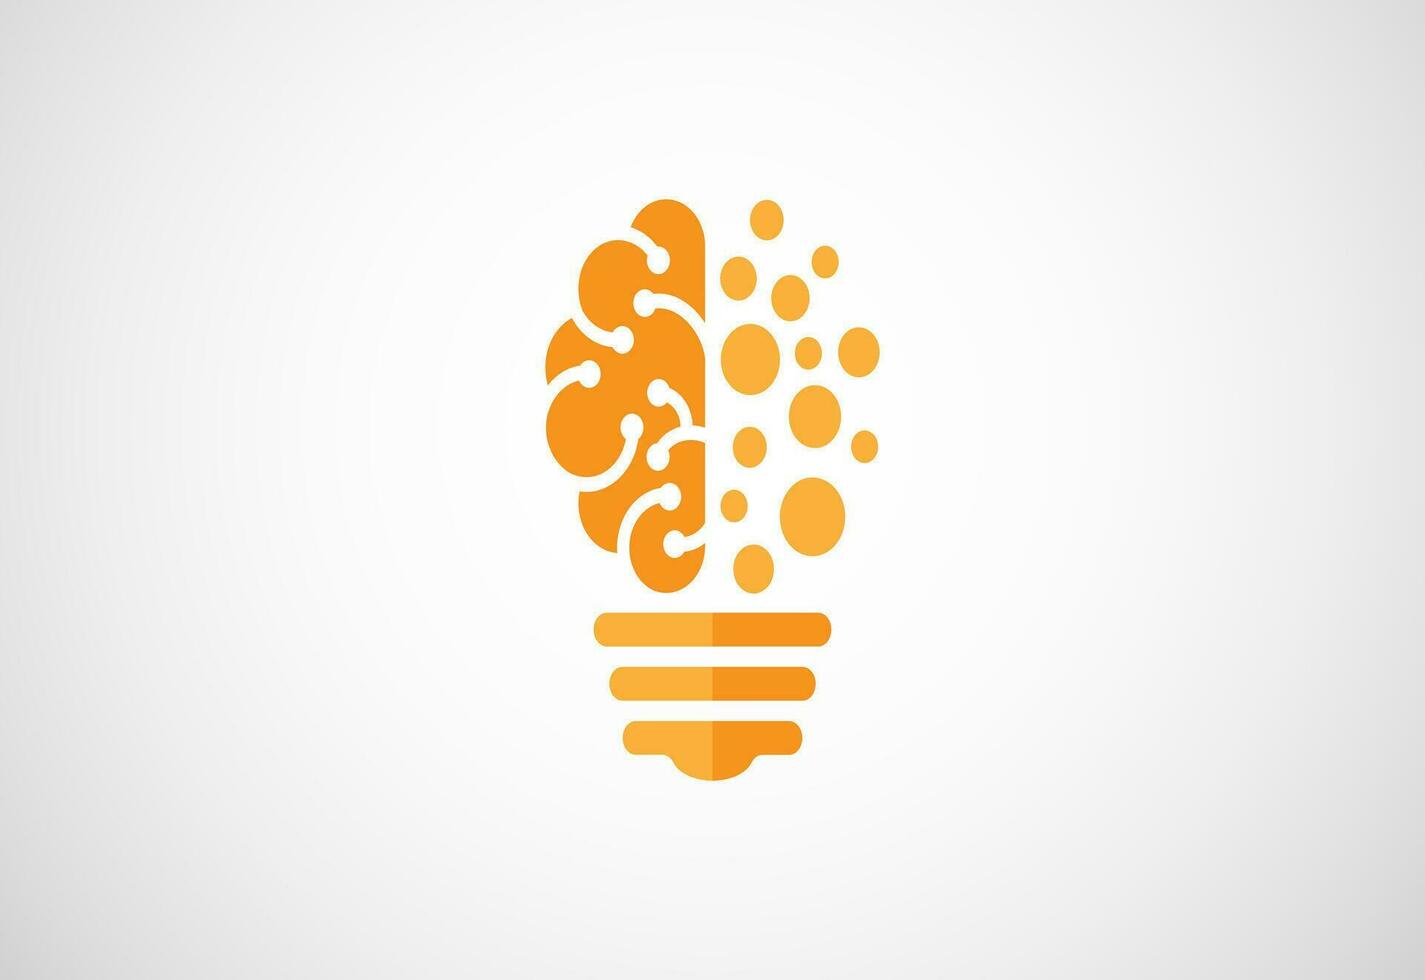 head and brain minimalist style Brain icon, Brain Logo vector